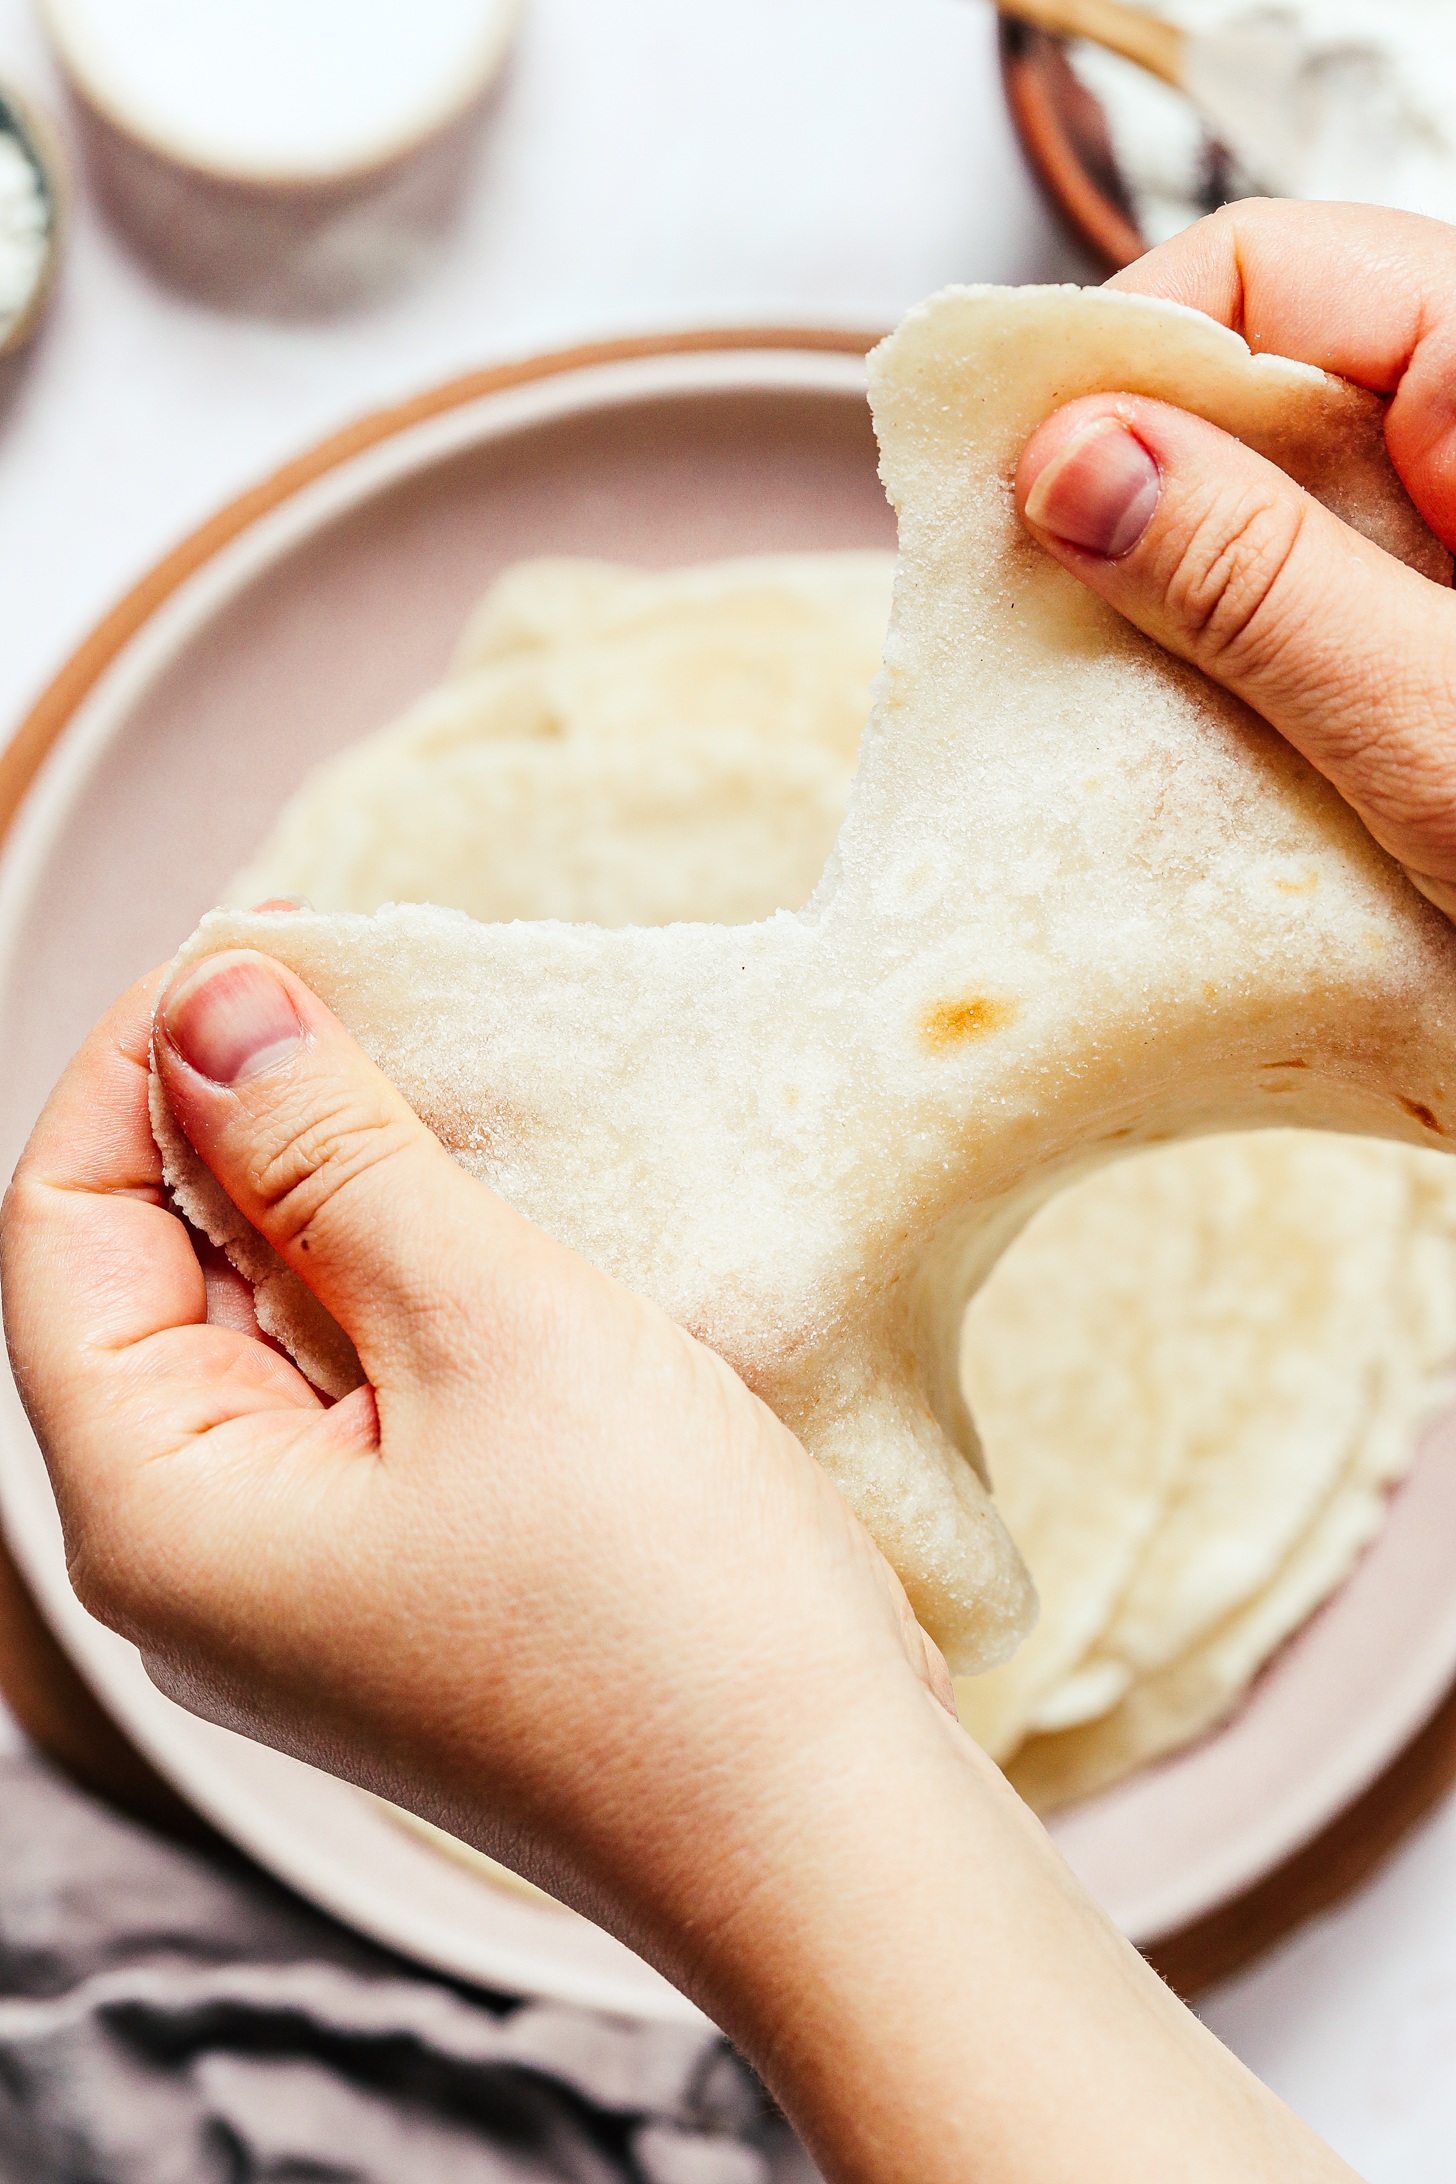 Tearing a grain-free cassava flour tortilla between hands to show the chewy texture